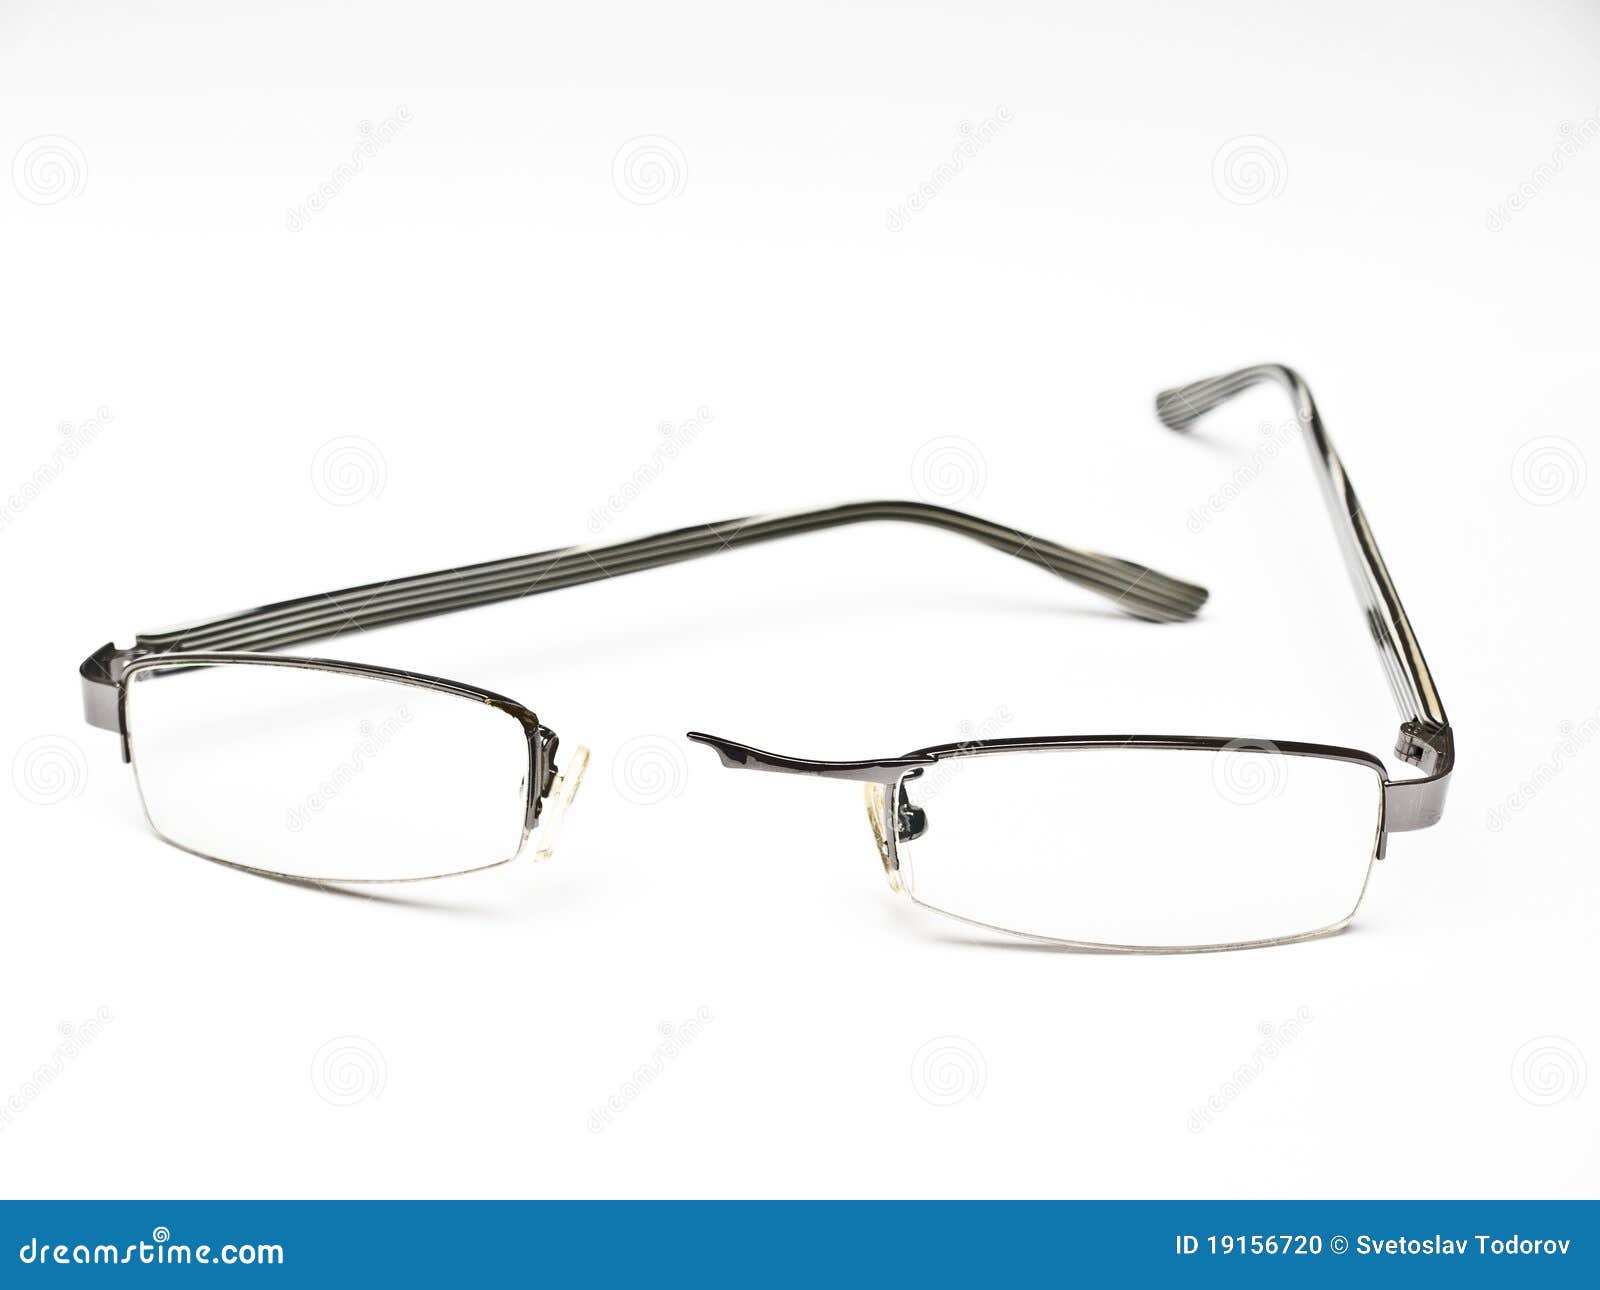 broken eyeglasses clipart - photo #9